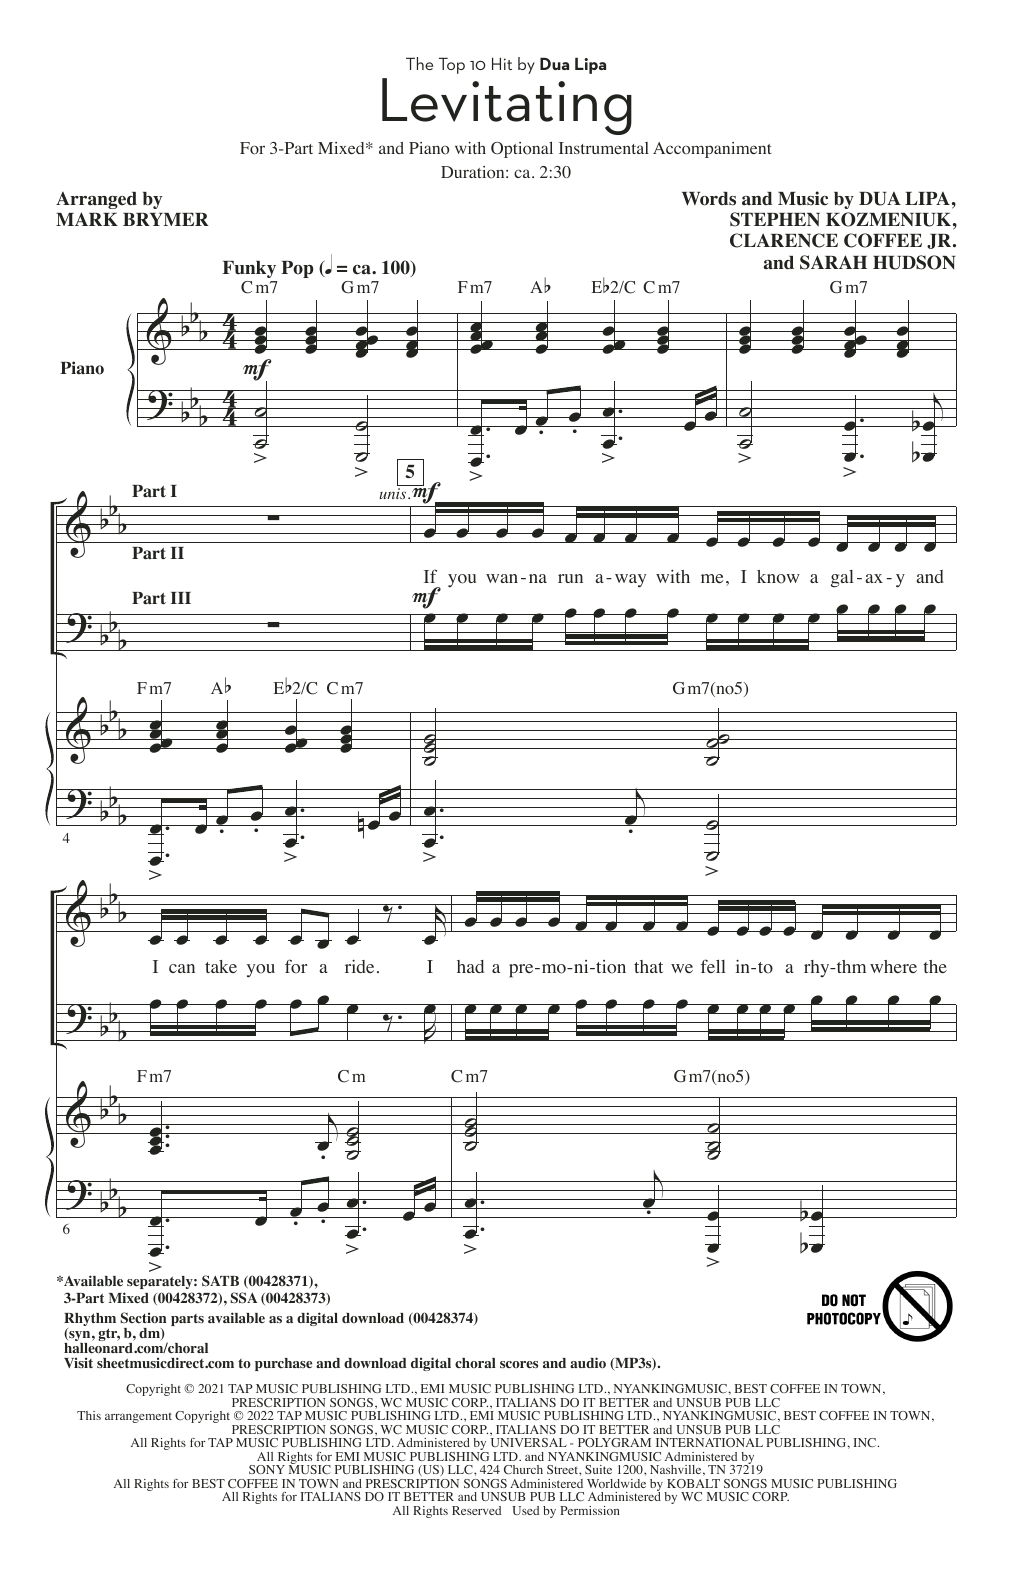 Dua Lipa Levitating (arr. Mark Brymer) Sheet Music Notes & Chords for SATB Choir - Download or Print PDF